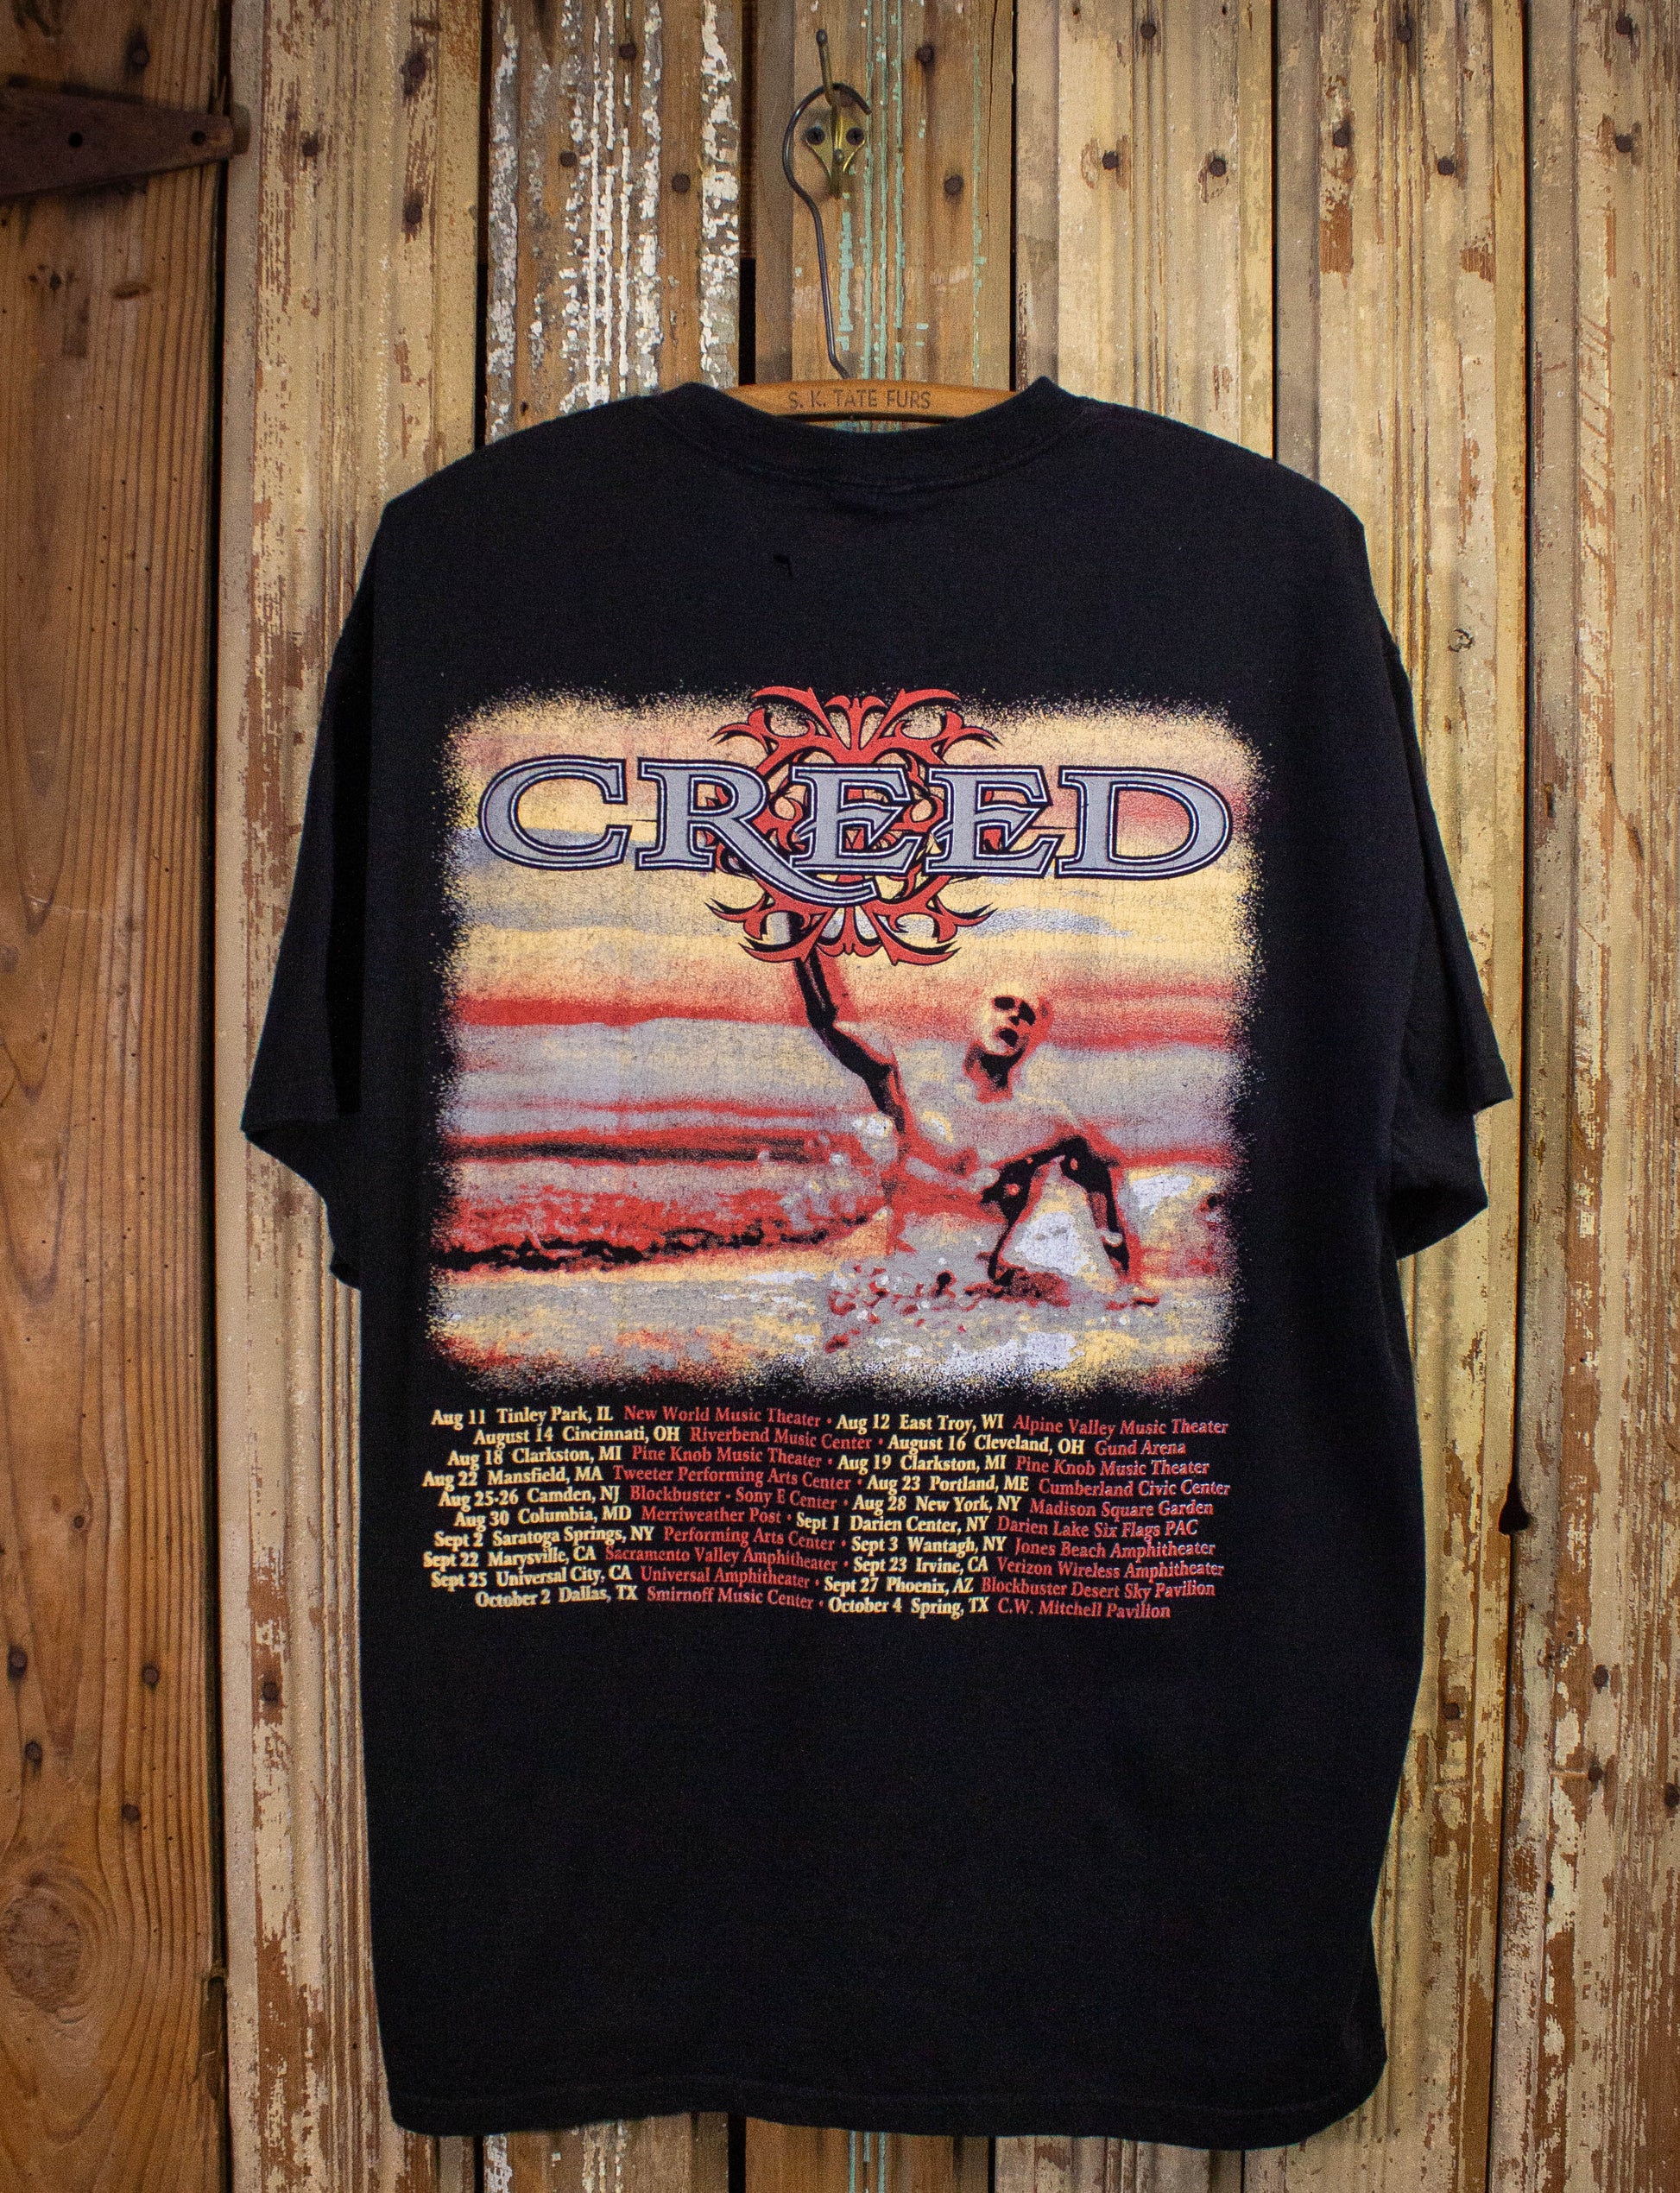 Vintage Creed Human Clay Tour Concert T Shirt 2000 Black XL